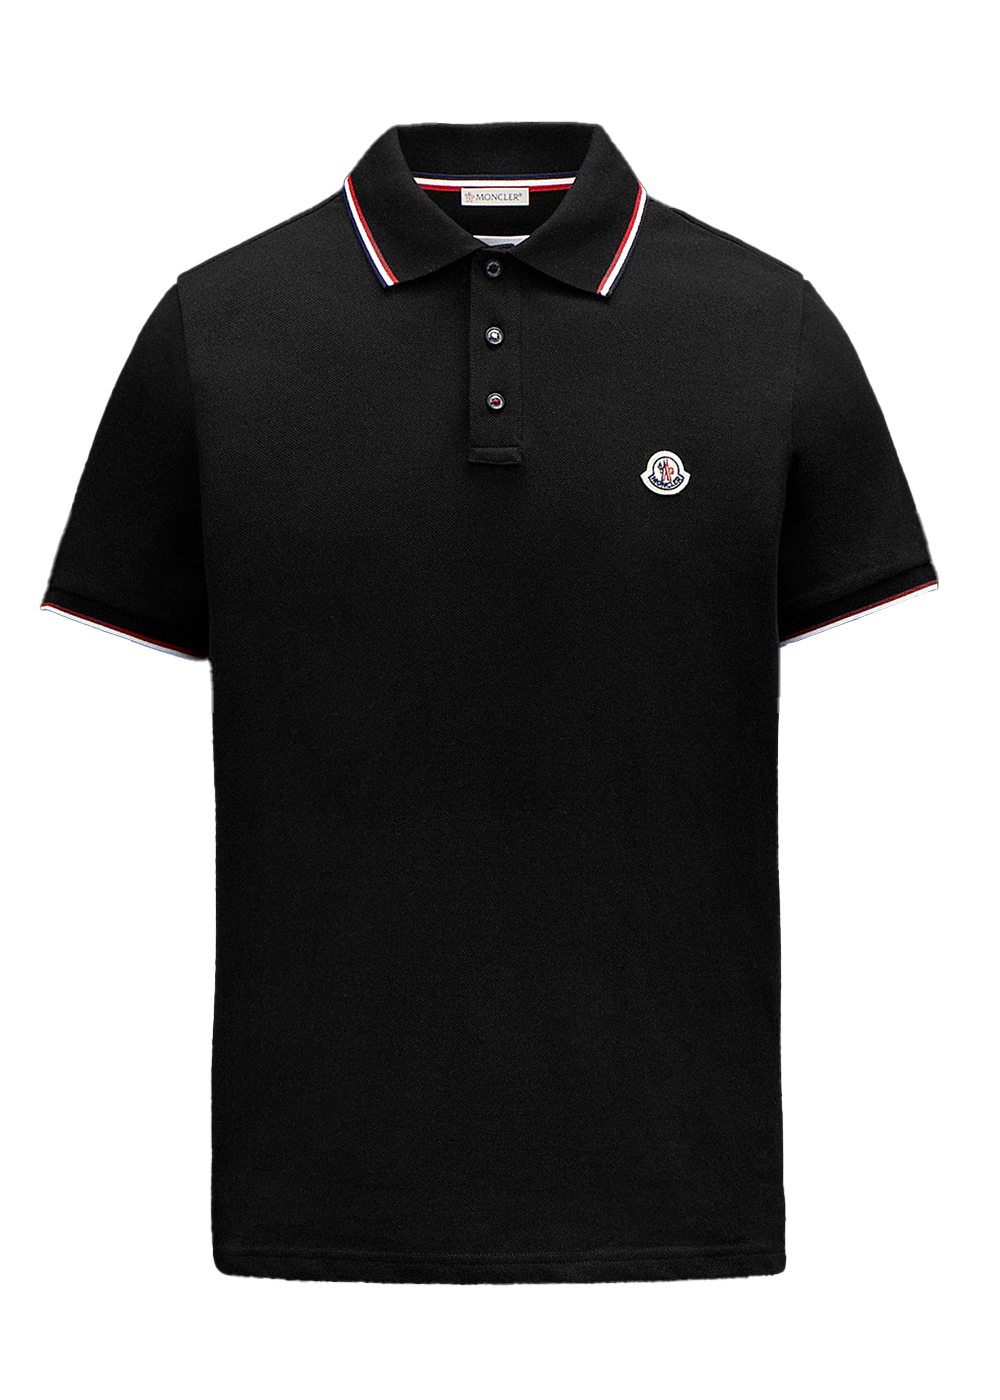 Moncler Logo Polo Shirt Black/Red/White Men's - US